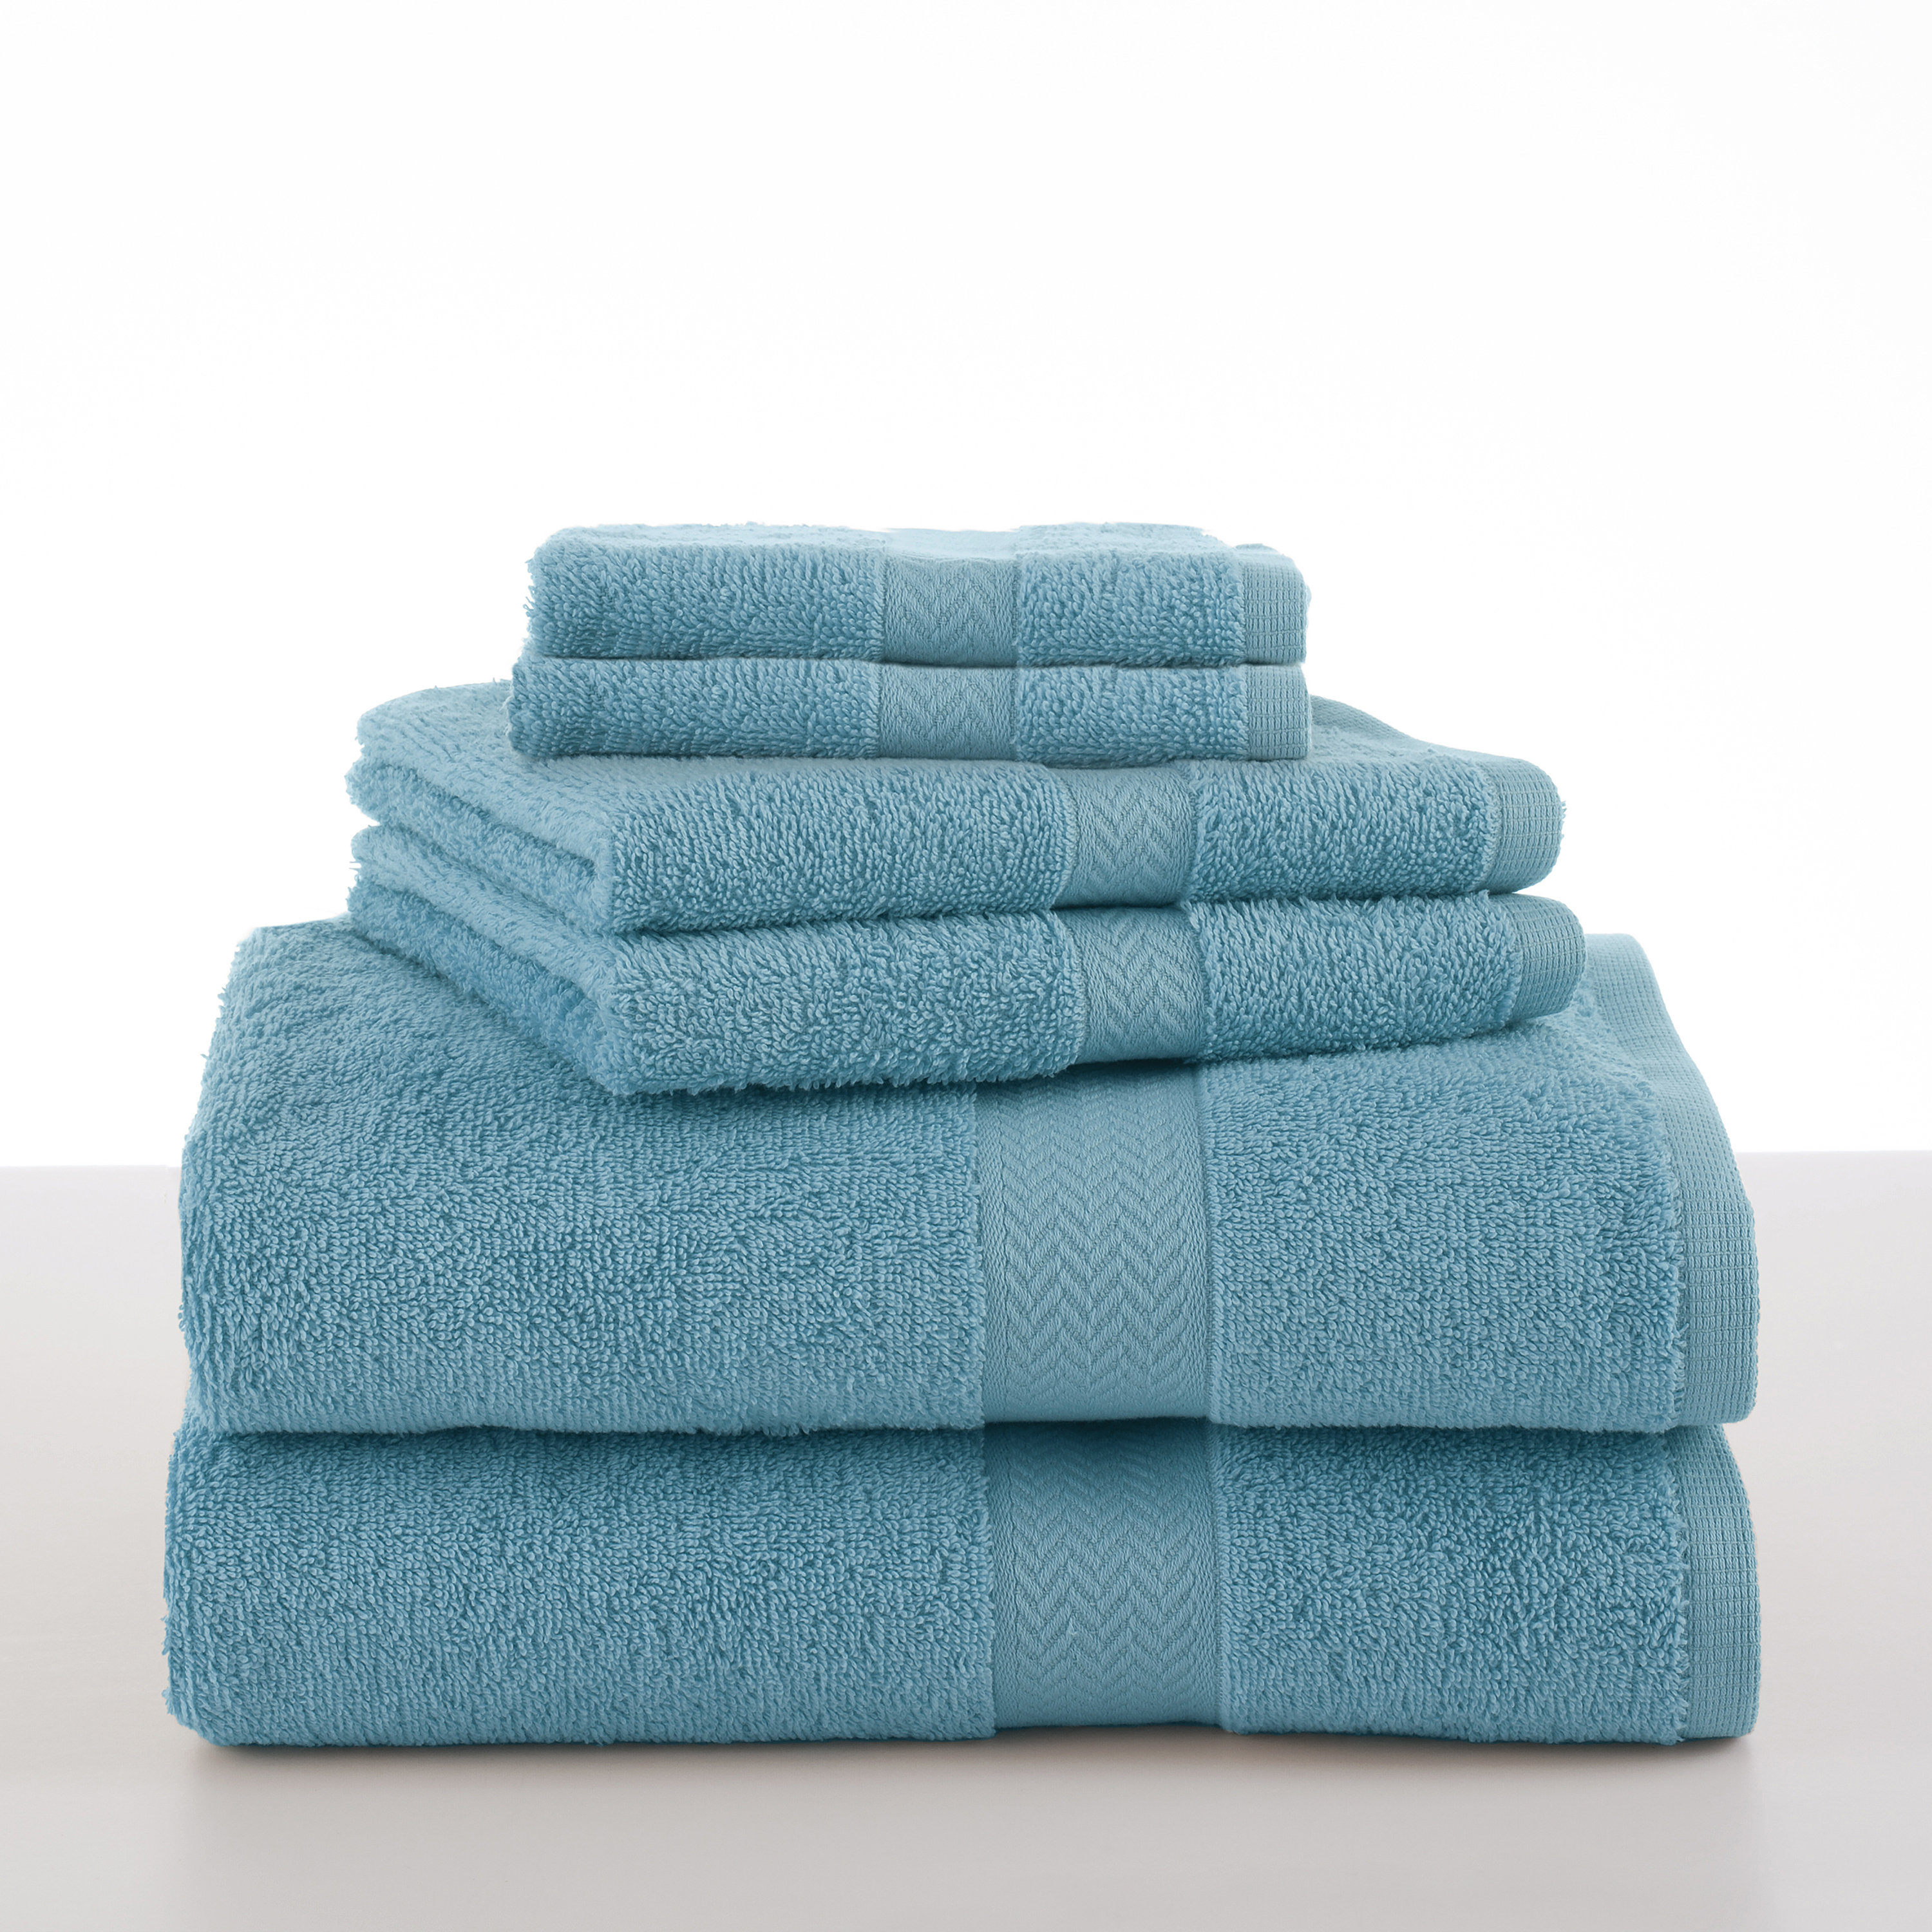 Martex Ringspun Cotton Bath Towels & Reviews - Wayfair Canada